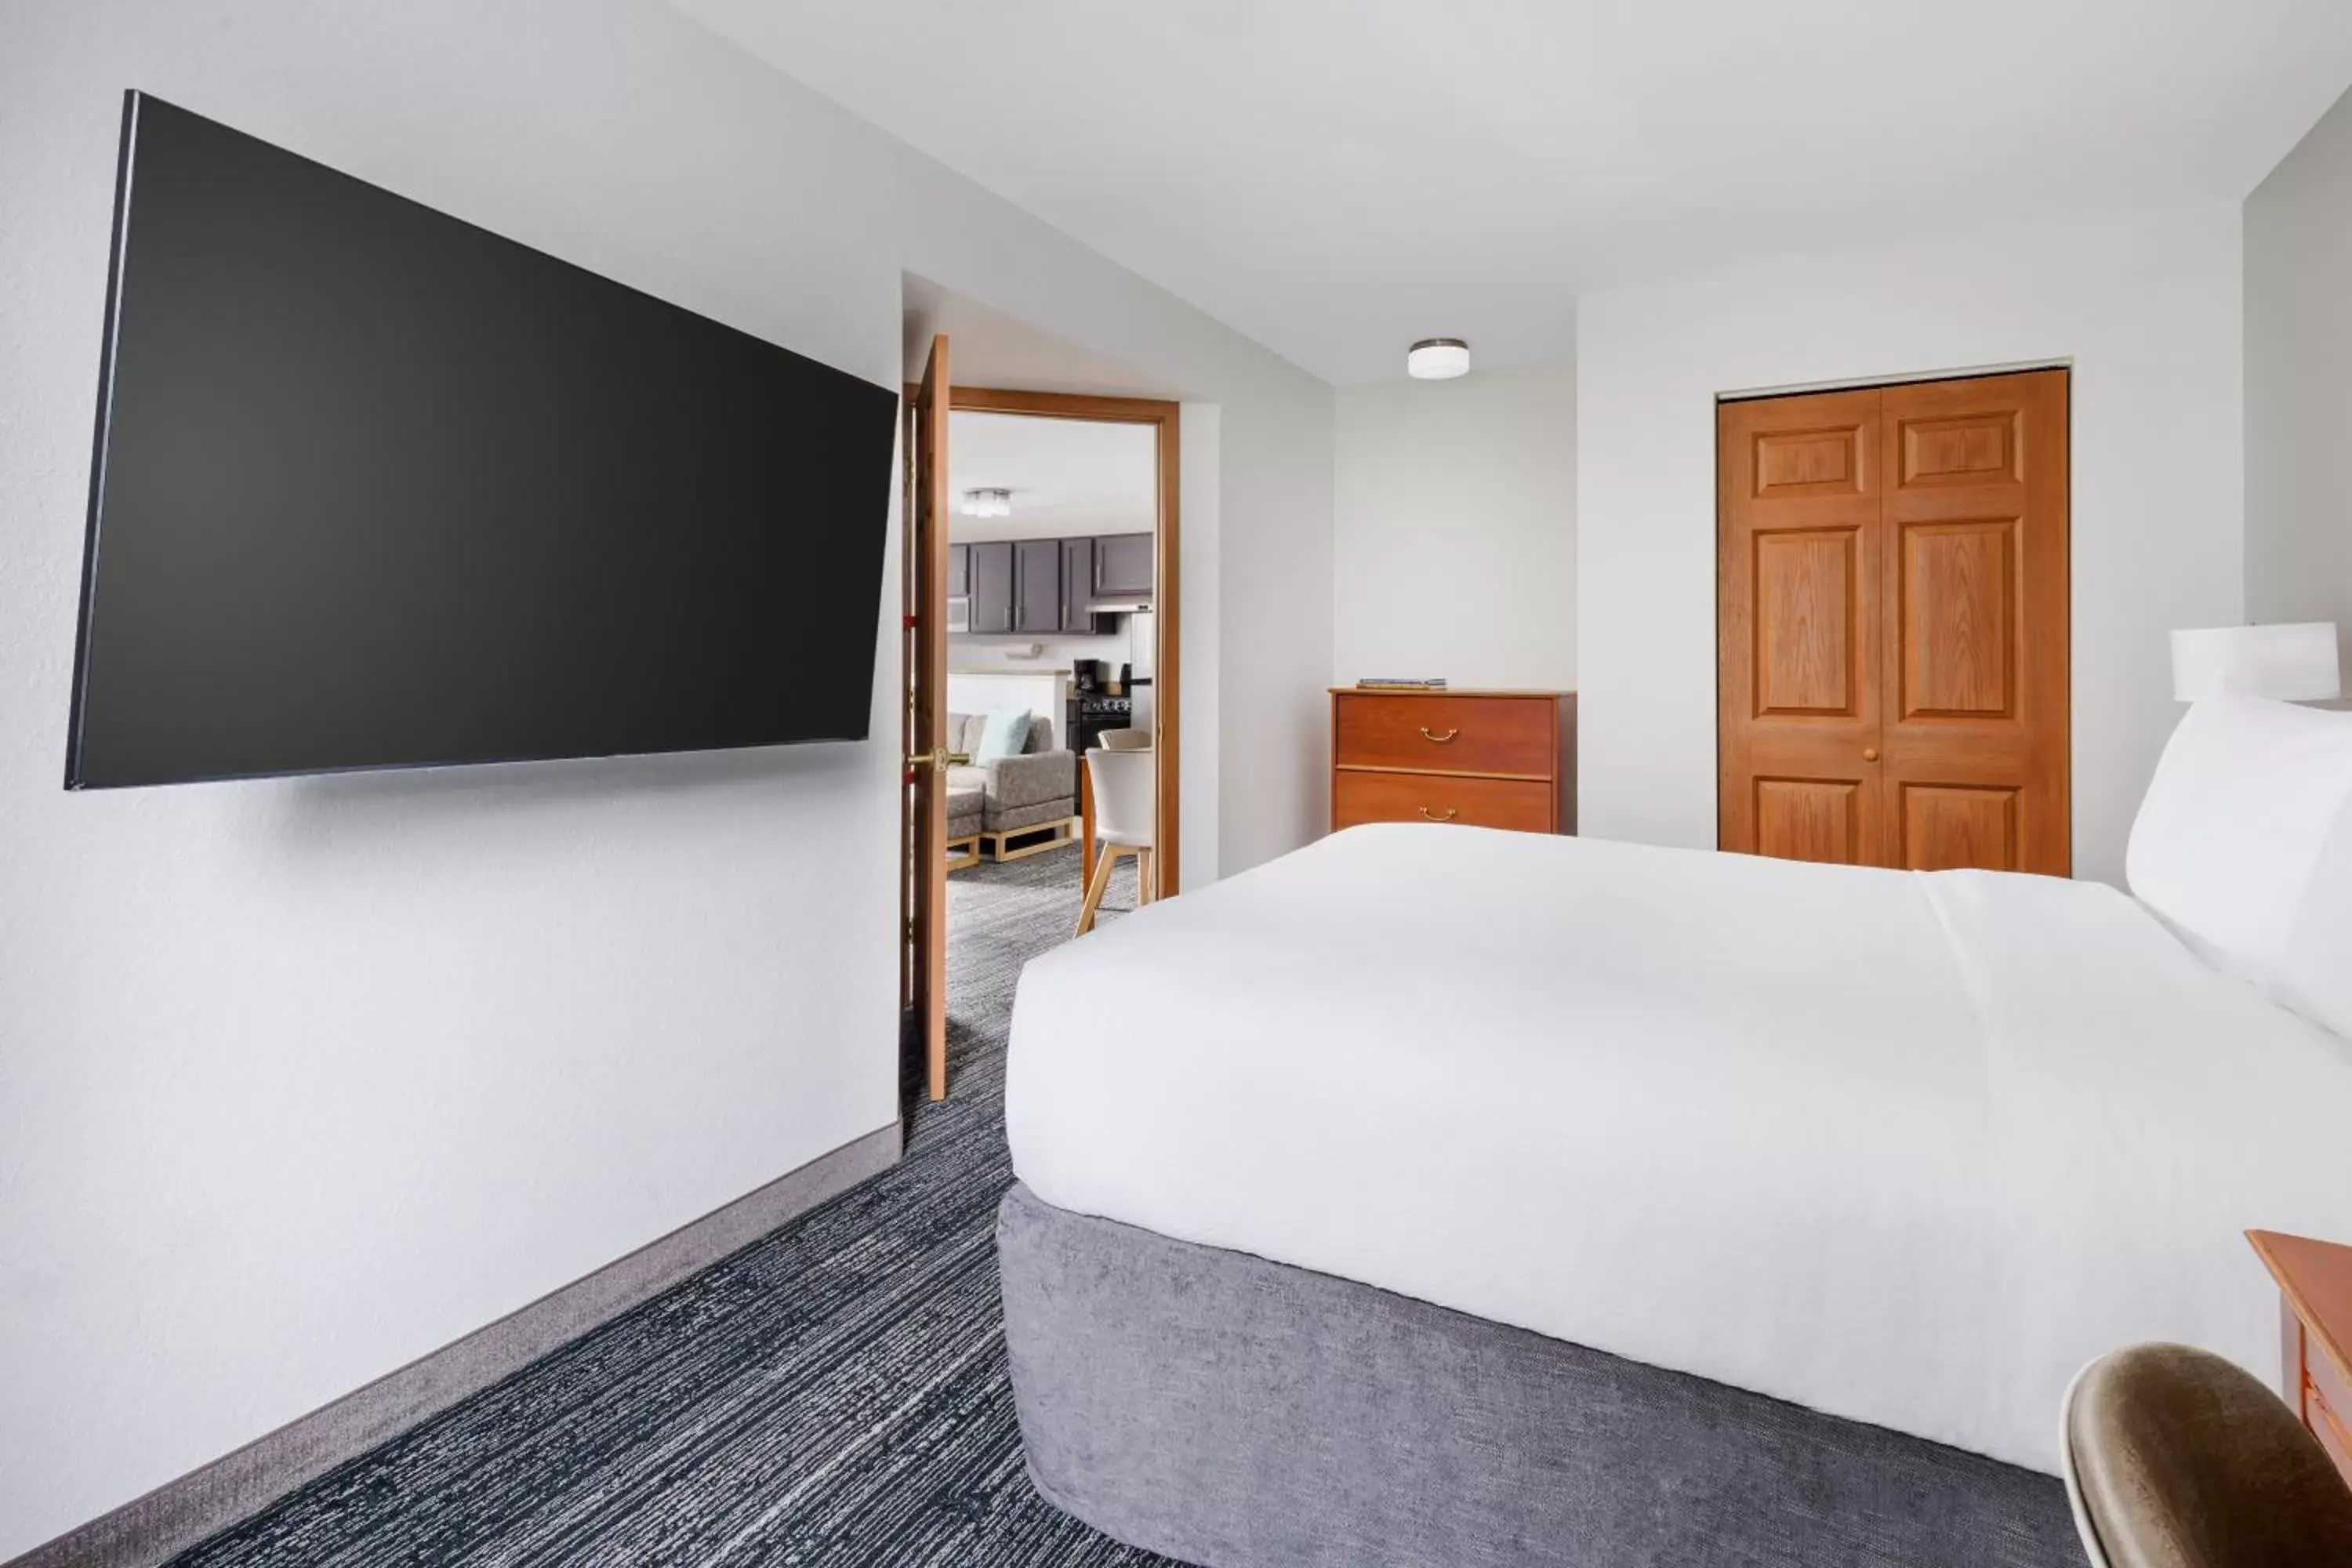 Bed in TownePlace Suites Philadelphia Horsham